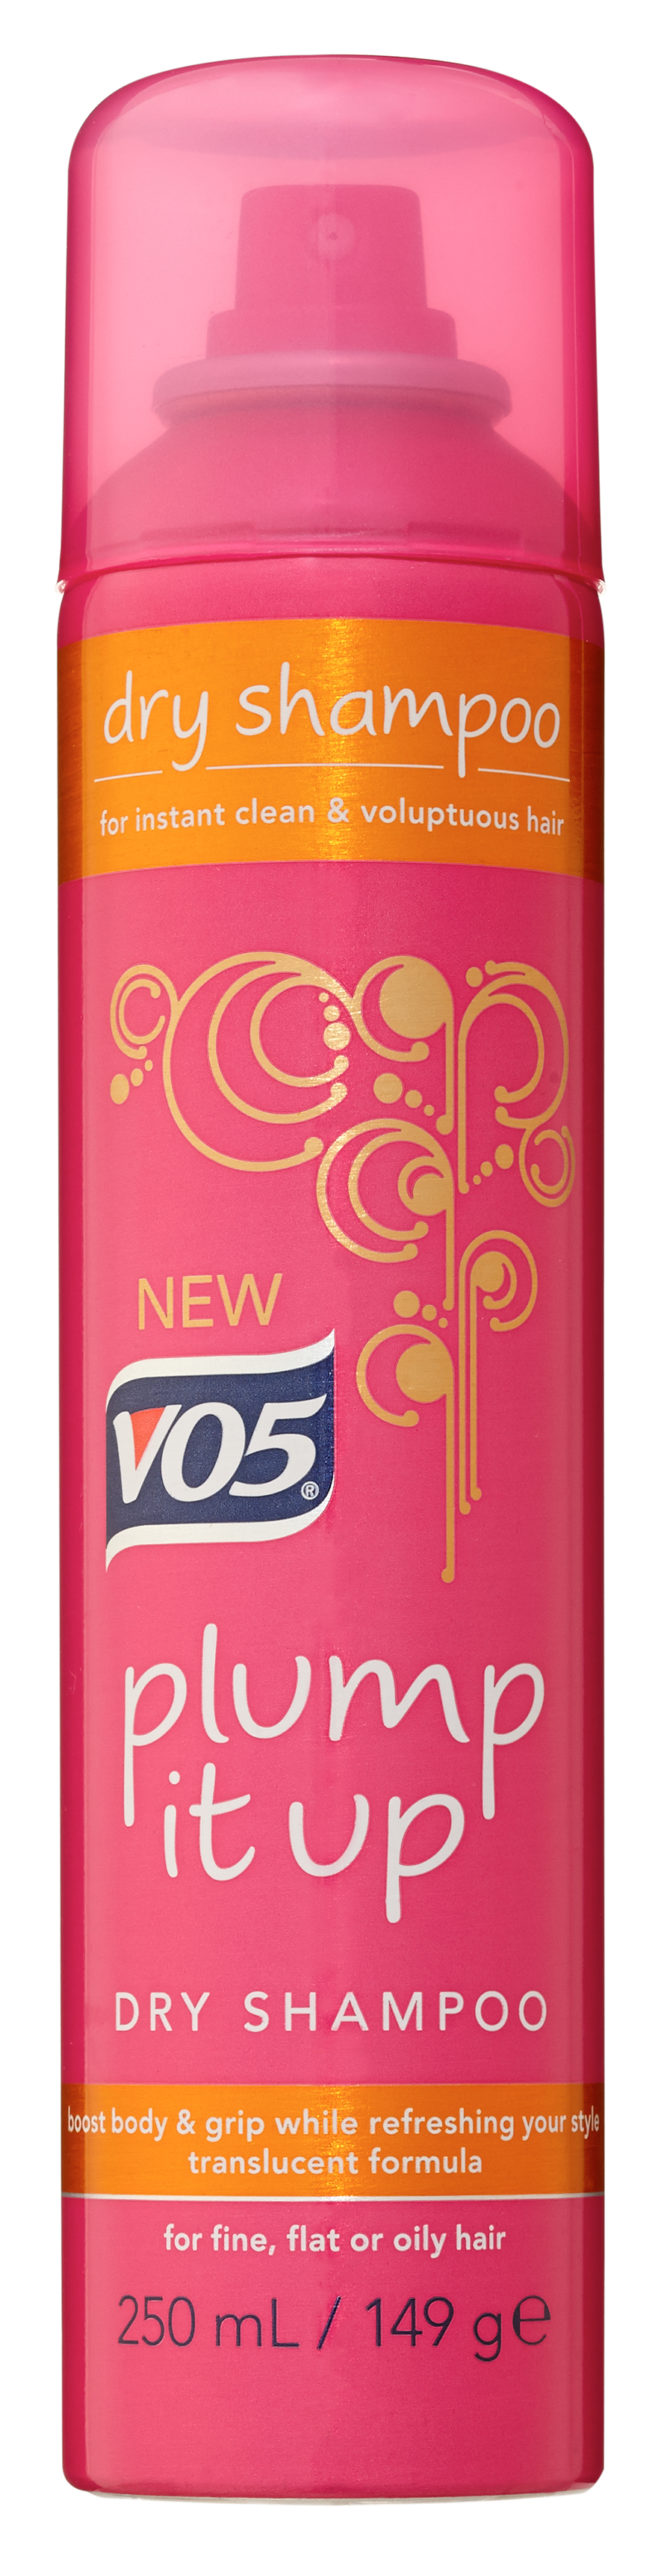 VO5 Plump It Up Dry Shampoo 250ML, RRP $7.99